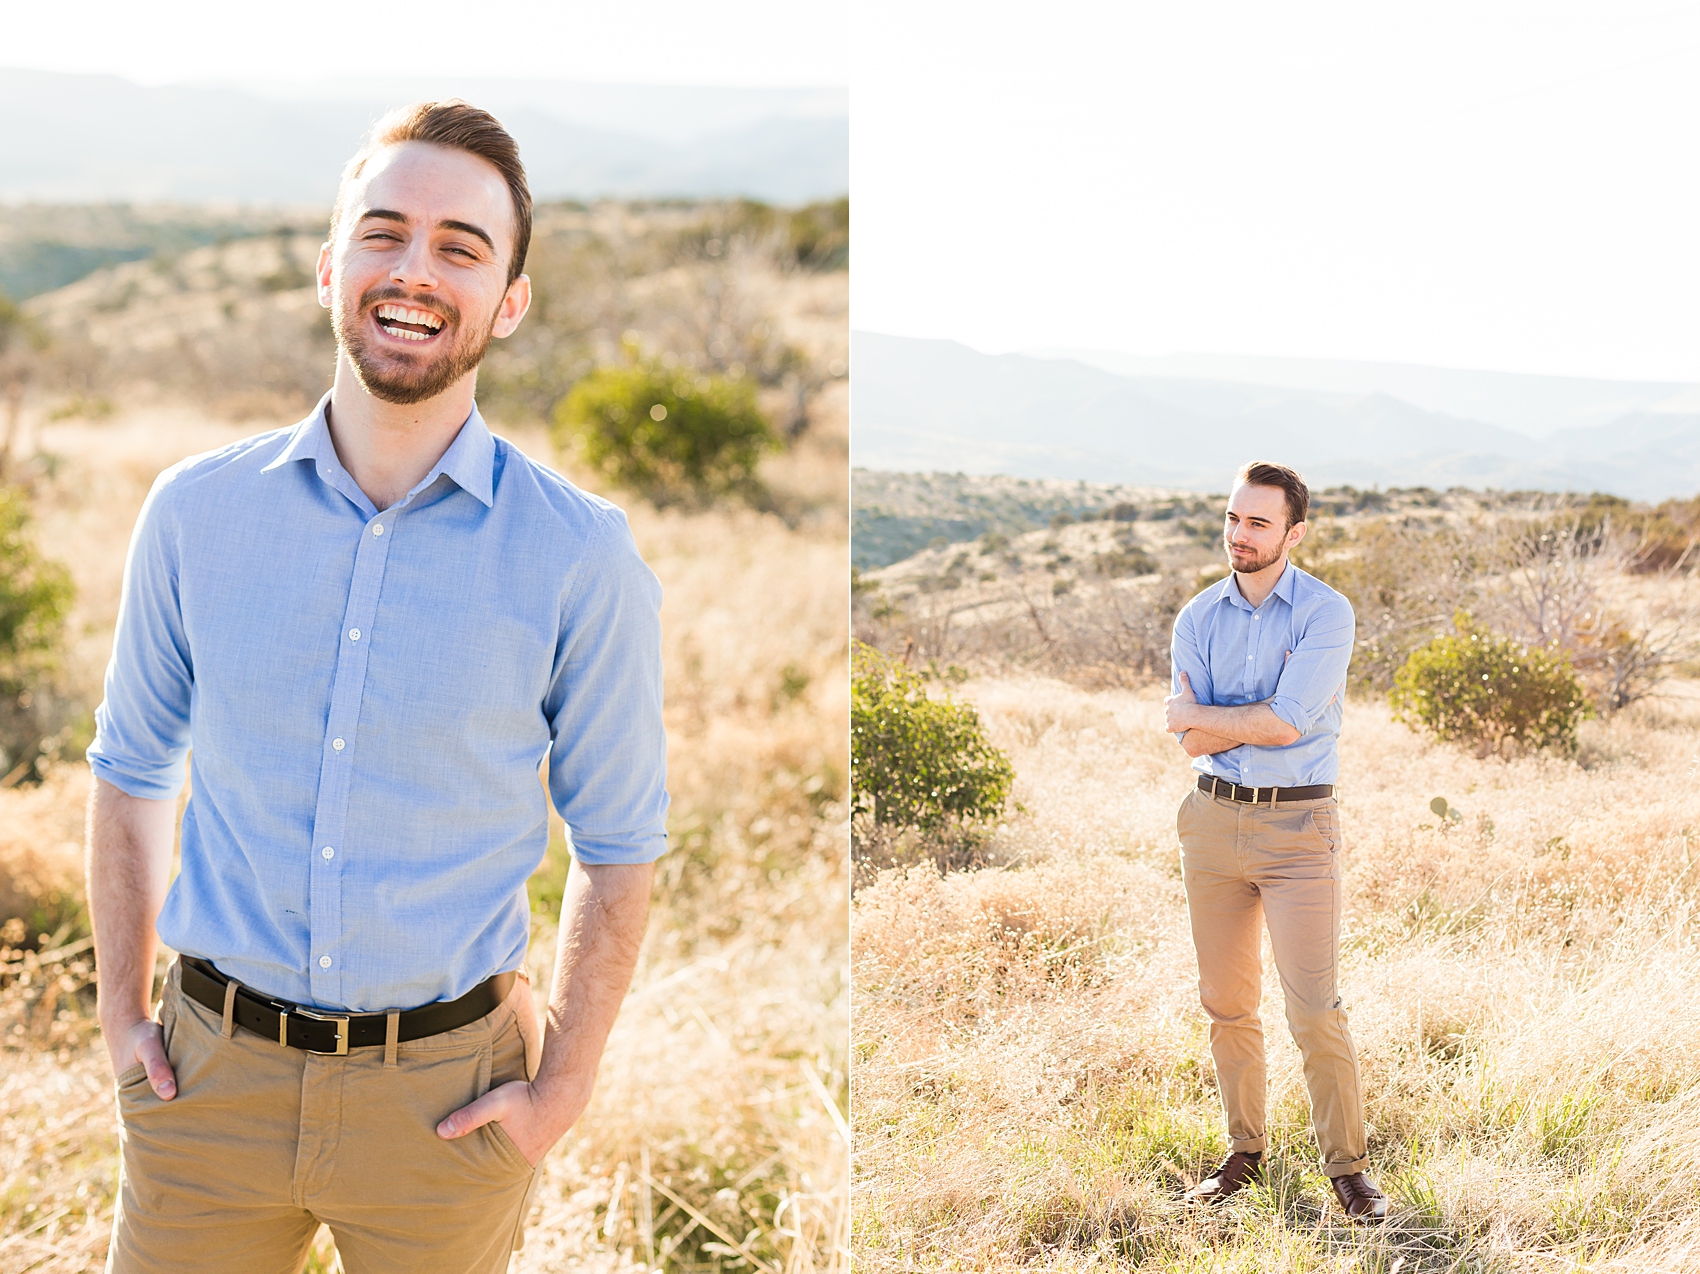 Leah Hope Photography | Scottsdale Phoenix Arizona Photographer | Humboldt Mountain Top | Desert Landscape | Mountain Views | Couple Pictures | College Senior Photos | What to Wear | Couple Poses | Senior Boy Girl Poses